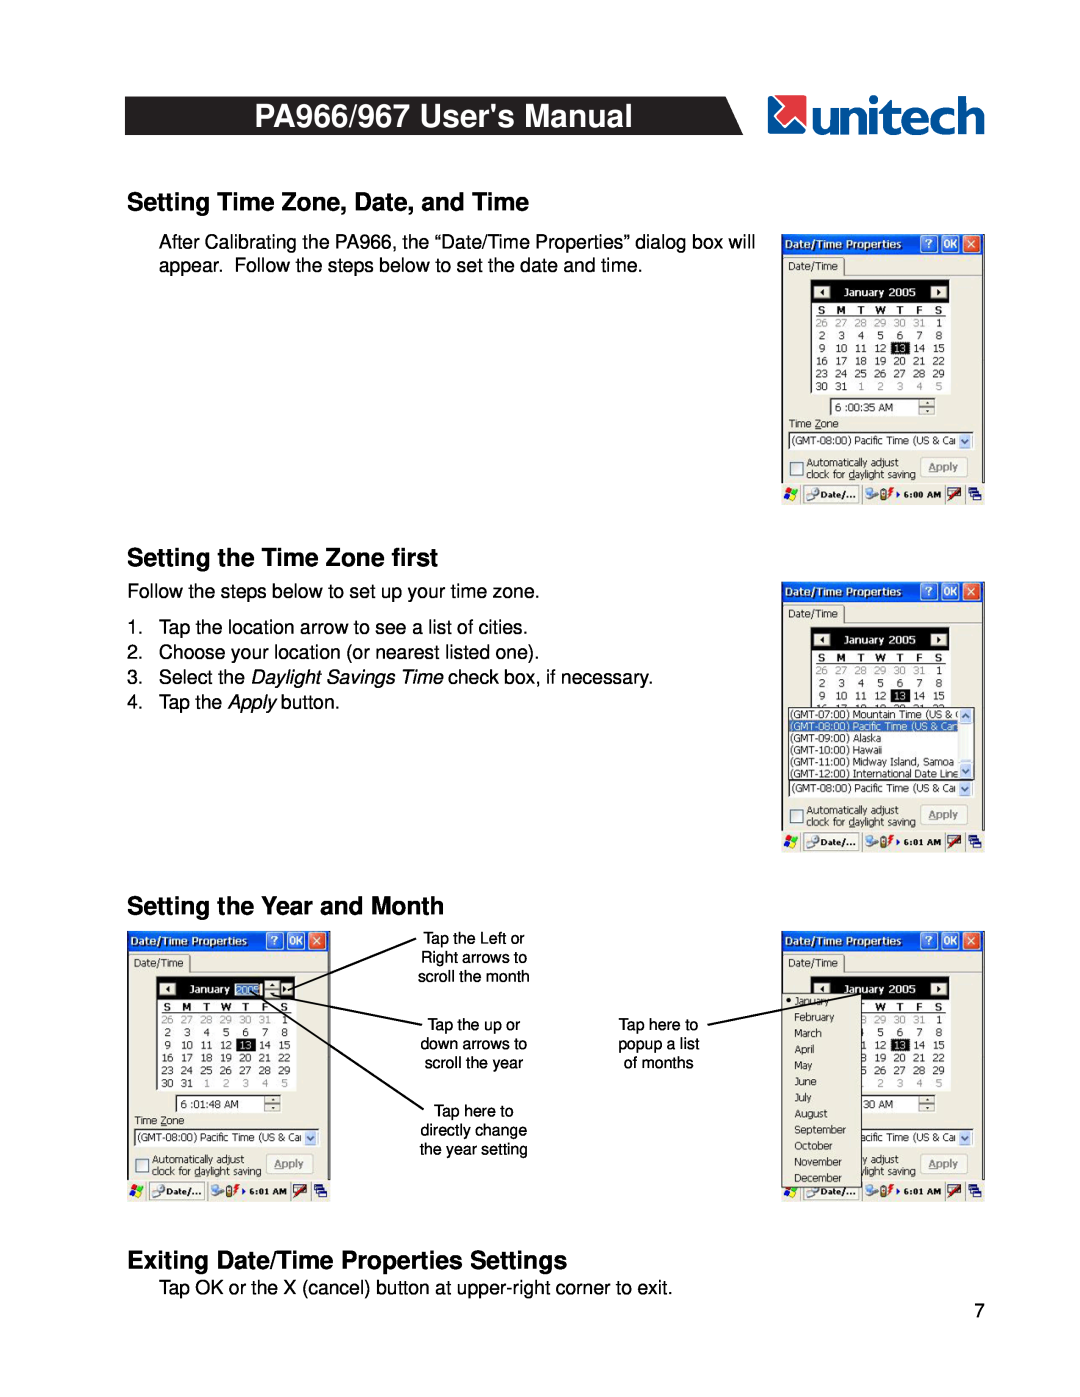 Unitech PA966, PA967 user manual Setting Time Zone, Date, and Time, Setting the Time Zone first, Setting the Year and Month 